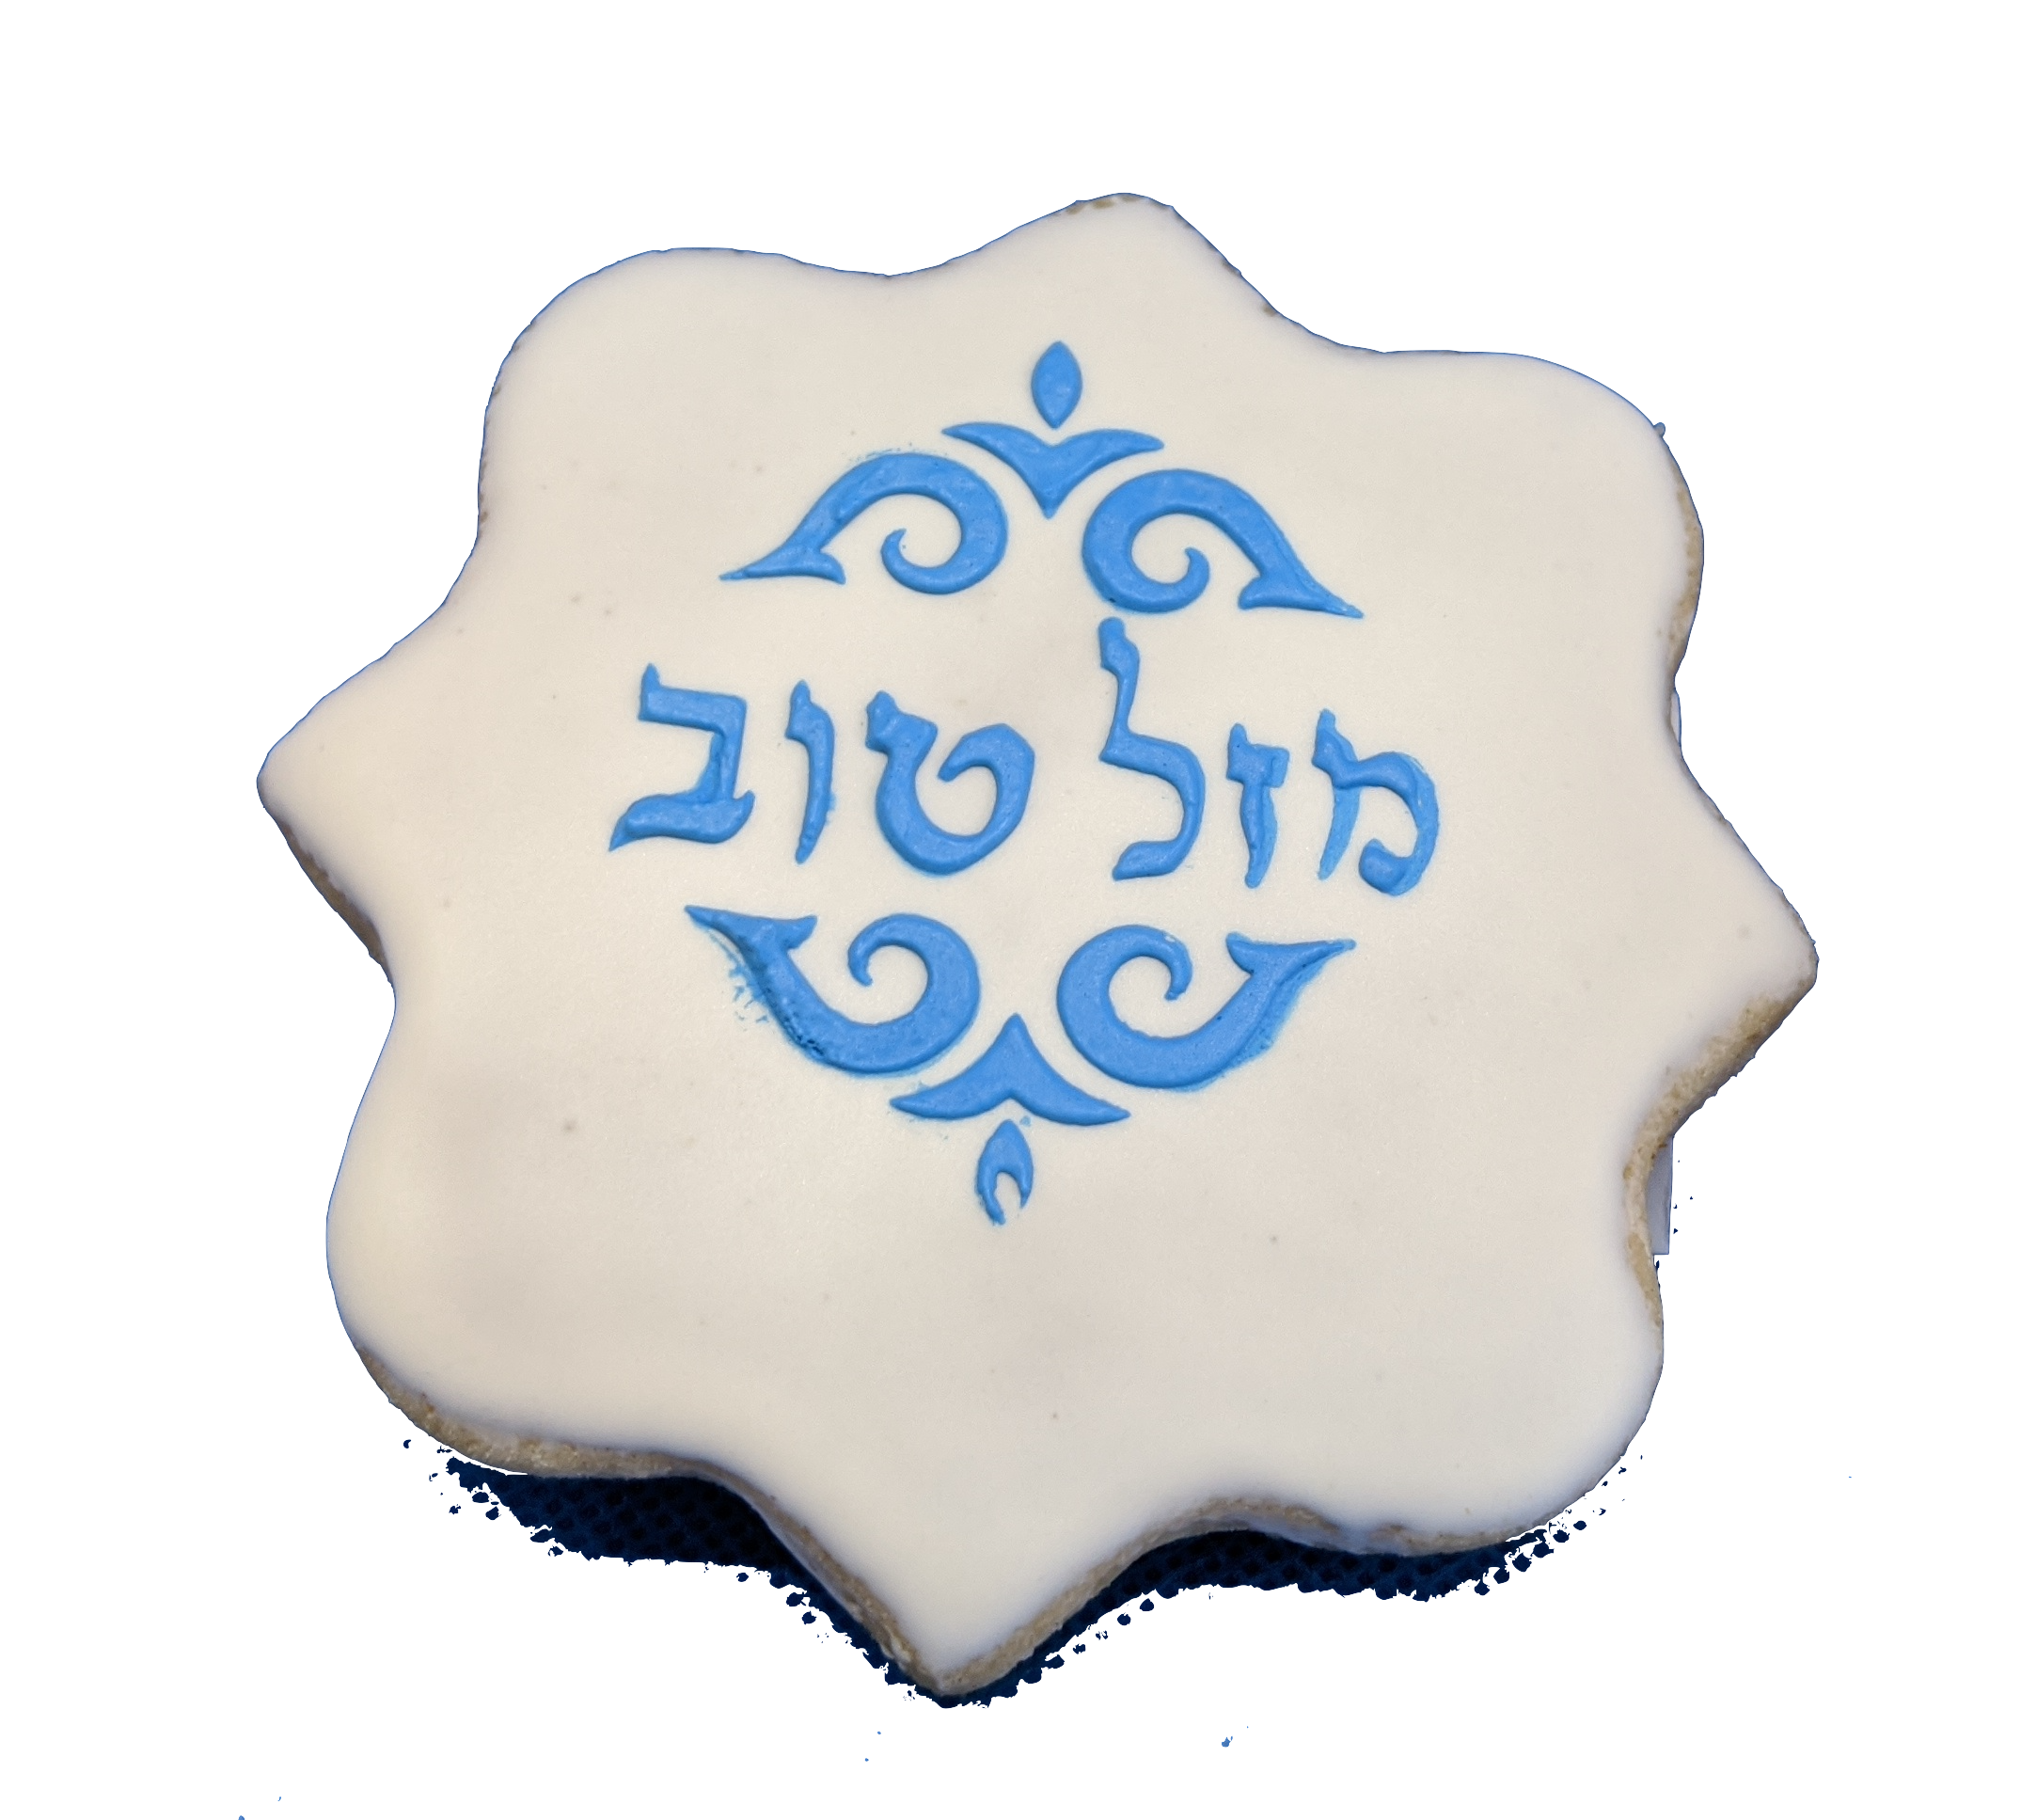 Mazel Tov Cookies